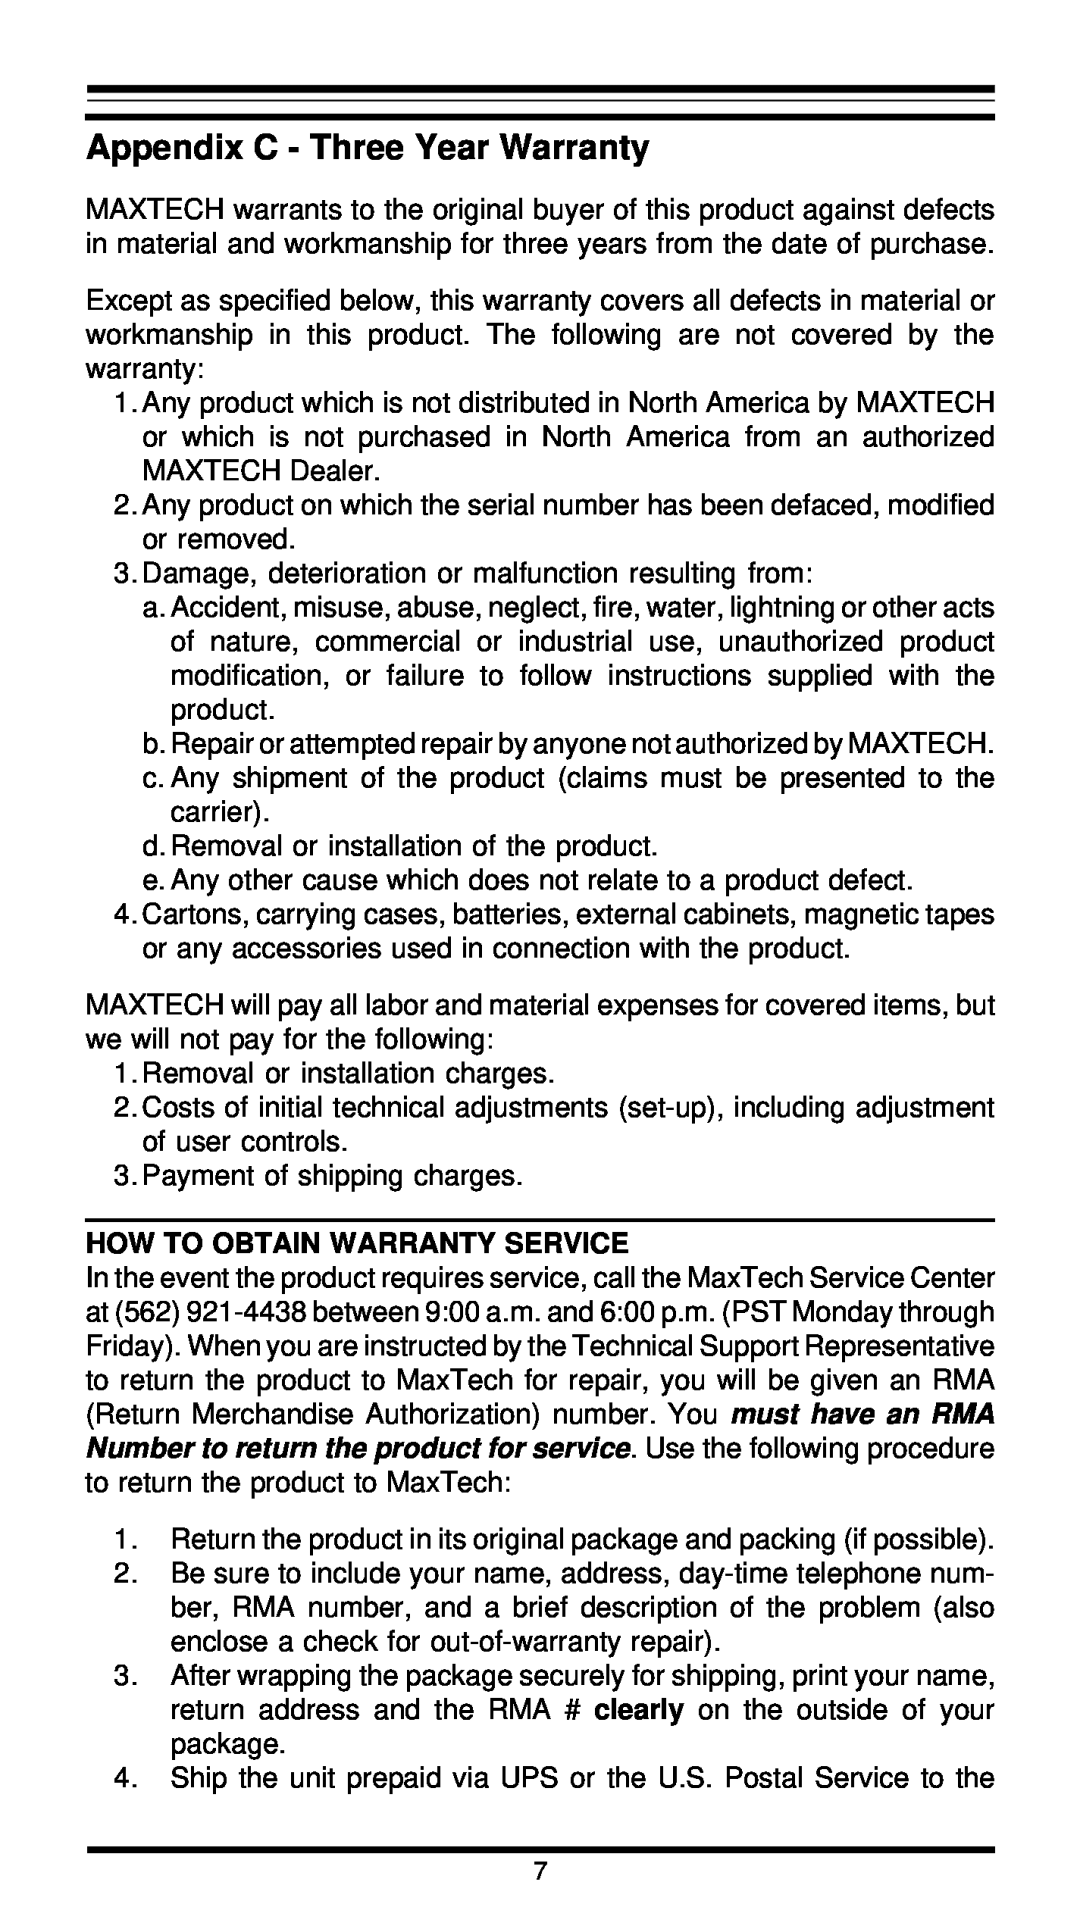 MaxTech XT5861 user manual Appendix C - Three Year Warranty, How To Obtain Warranty Service 